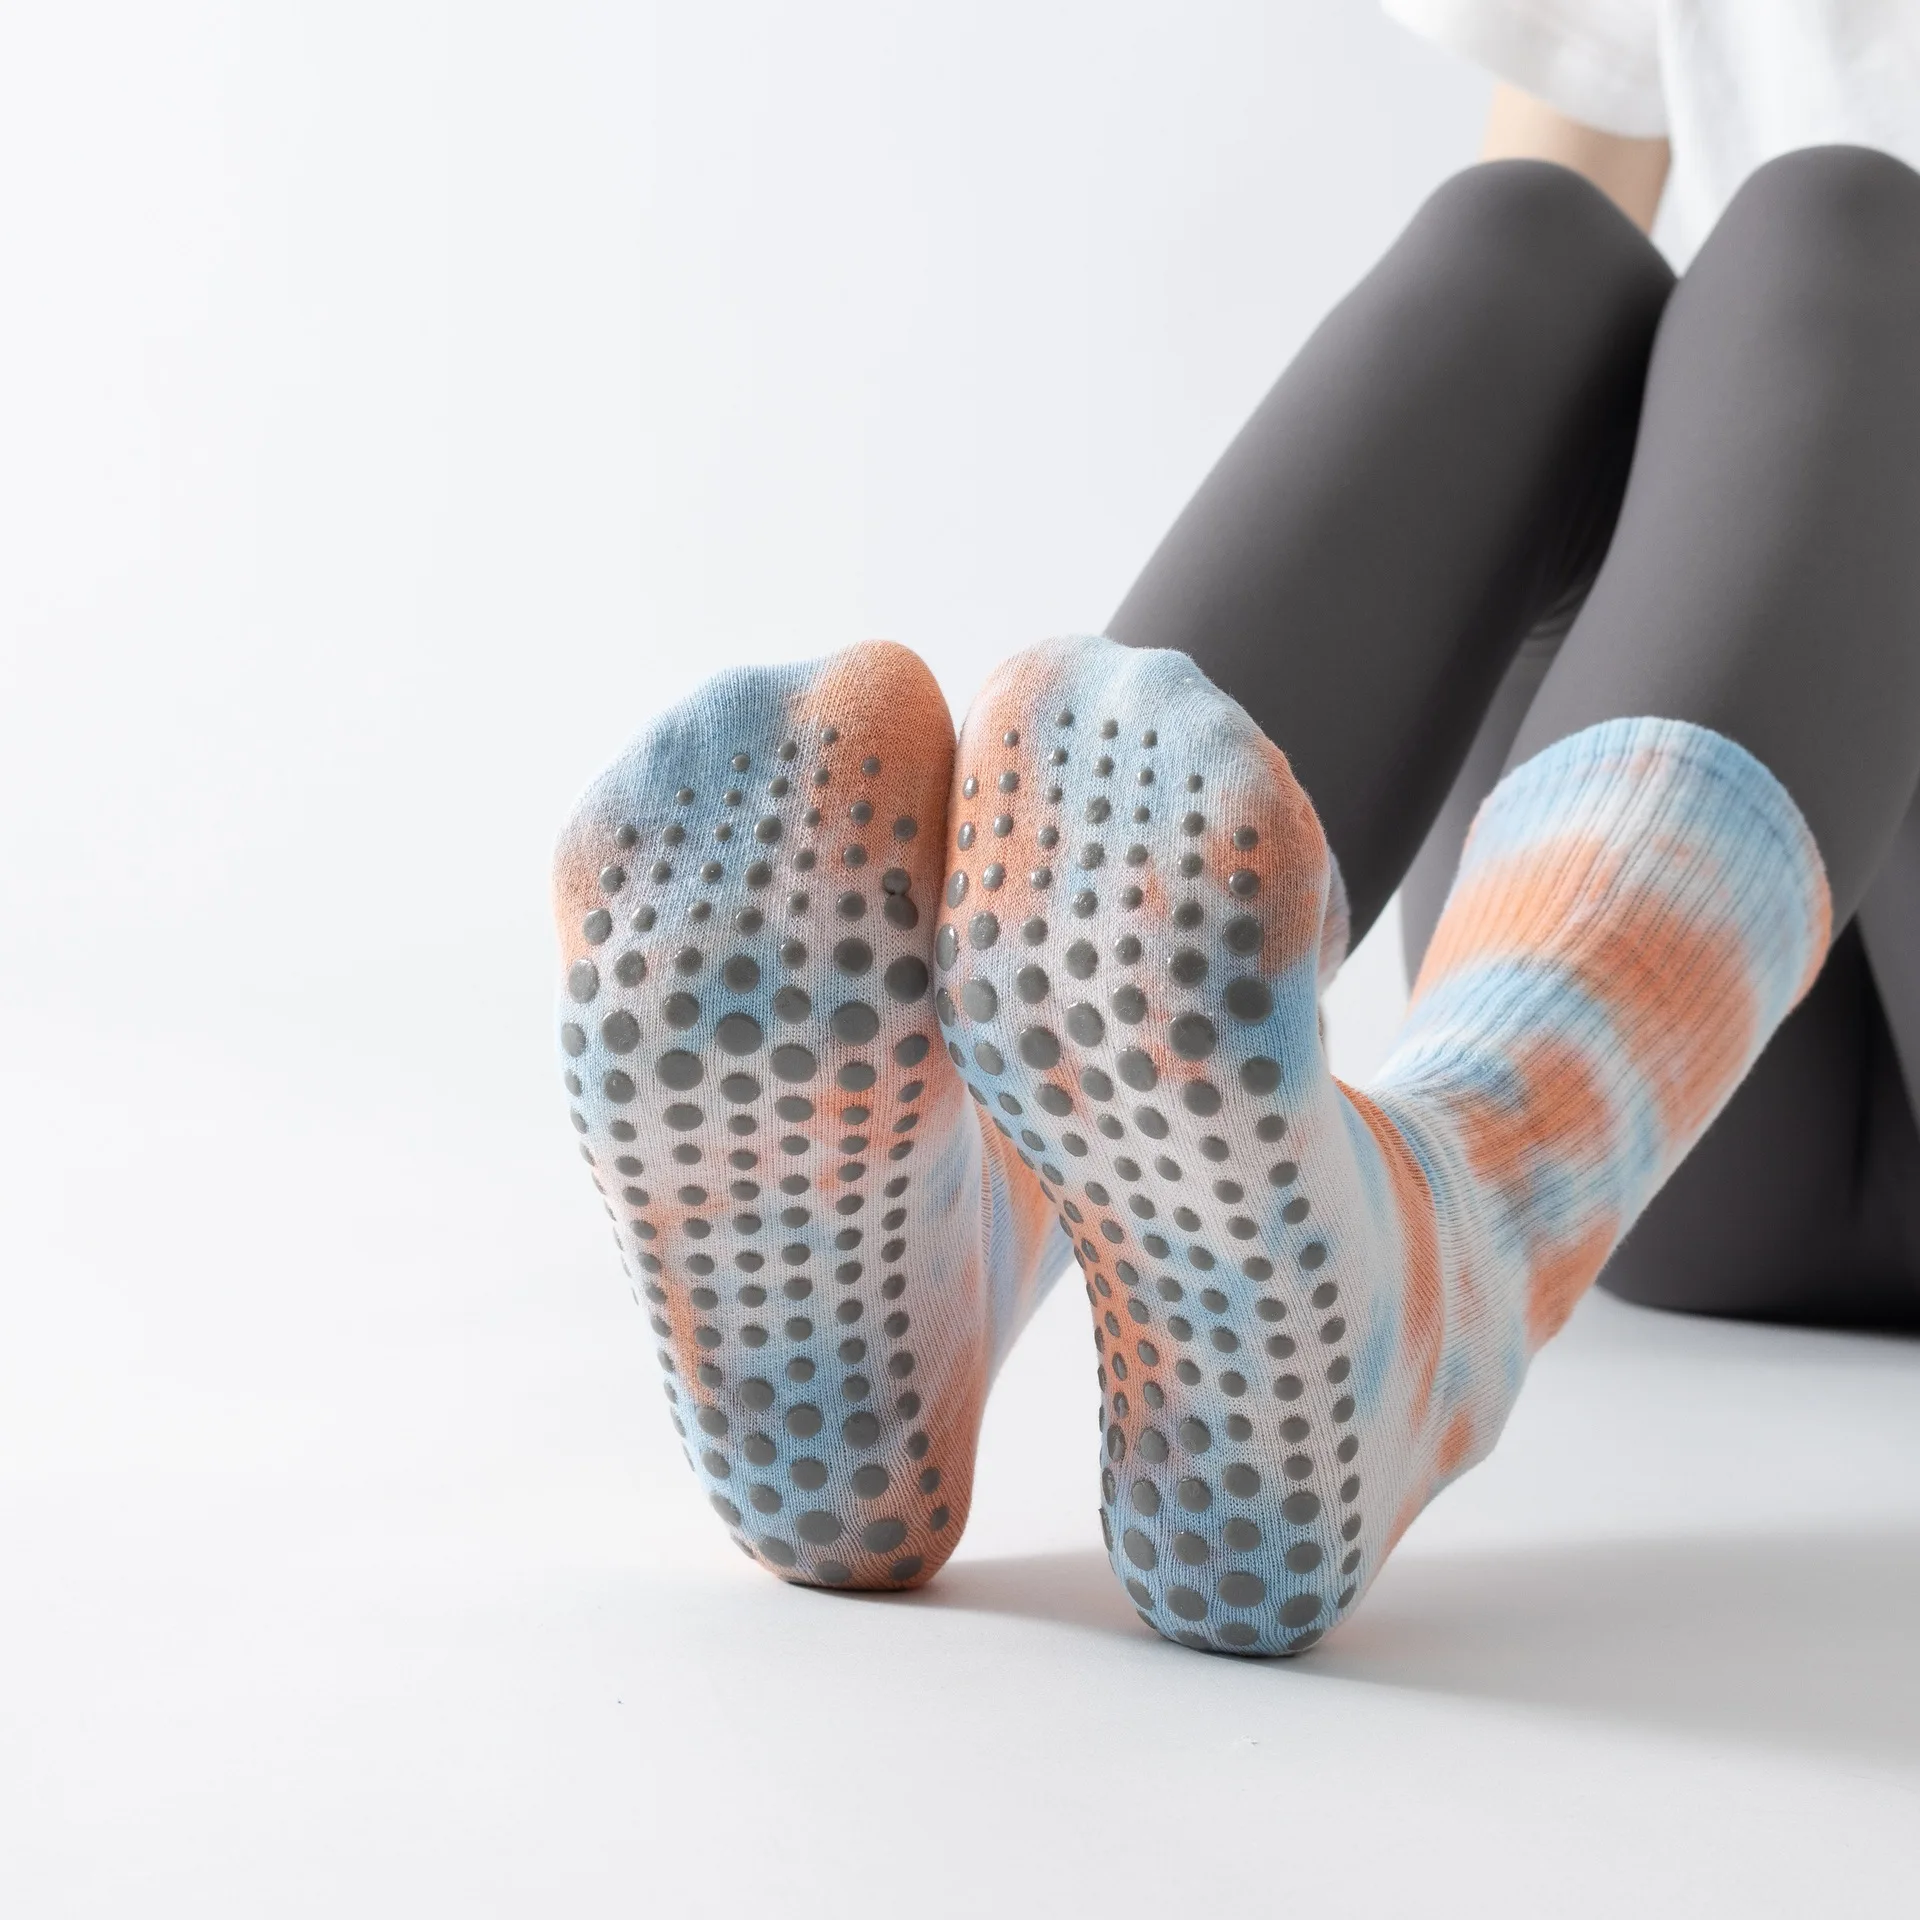 https://ae01.alicdn.com/kf/Sacfa3fc9d2a440358a9abe5d389287b6T/Women-Female-Pilates-Yoga-Yoga-Socks-Tie-Dye-Grip-Socks-Sport-Yoga-Socks-Anti-Slip-Pilates.jpg